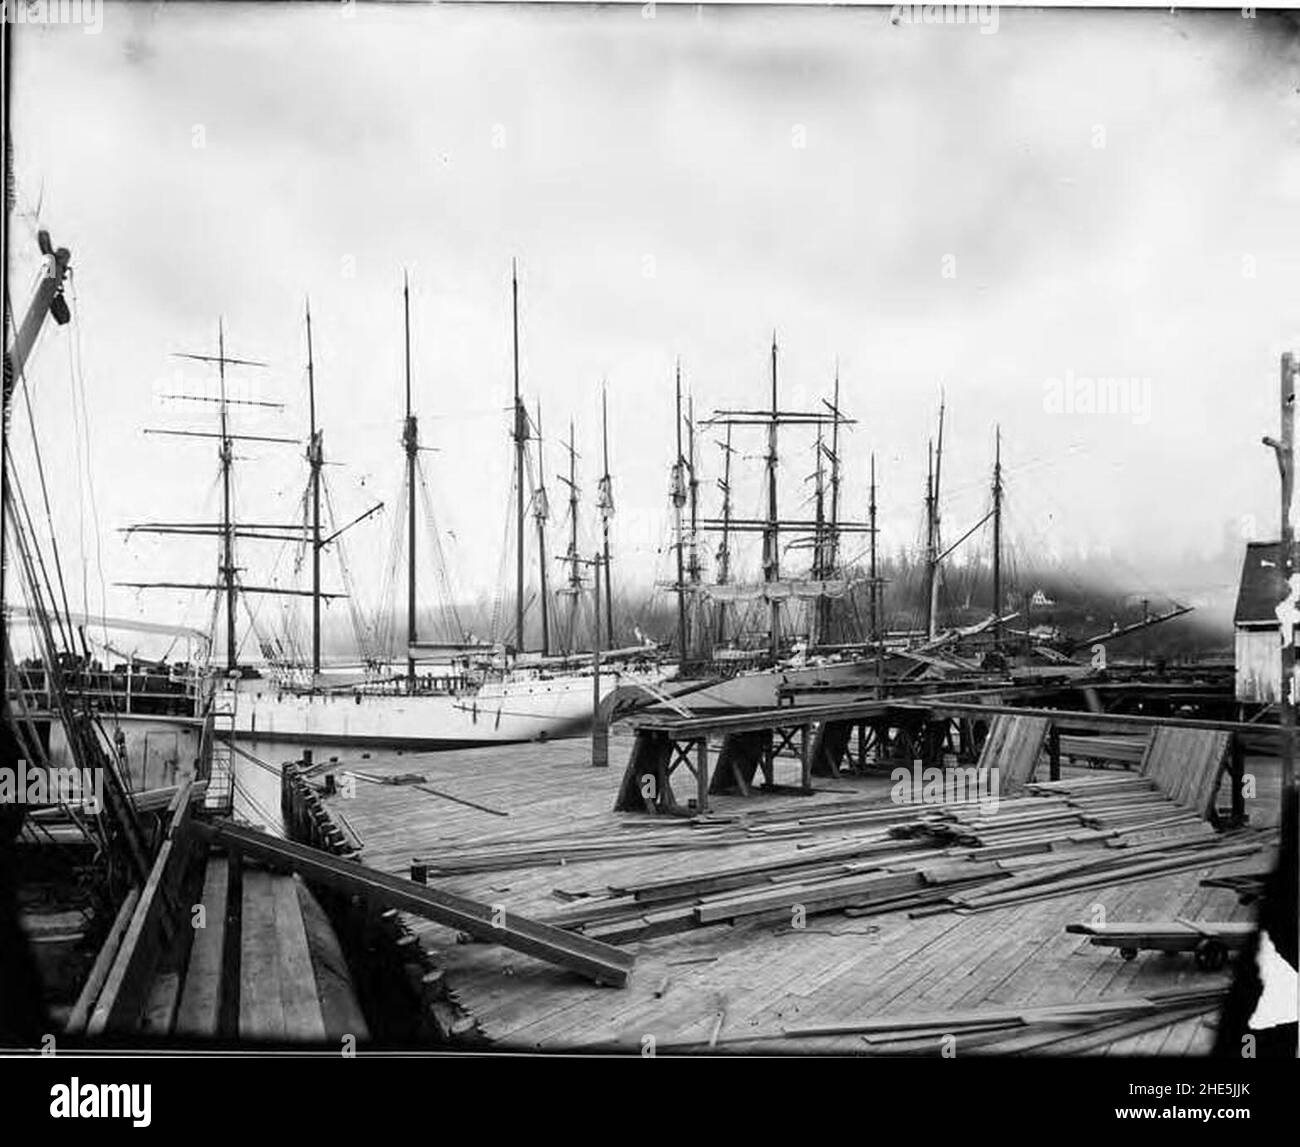 Sailing vessels ALTA, AMARANTH, and unknown ship at dock, Washington ...